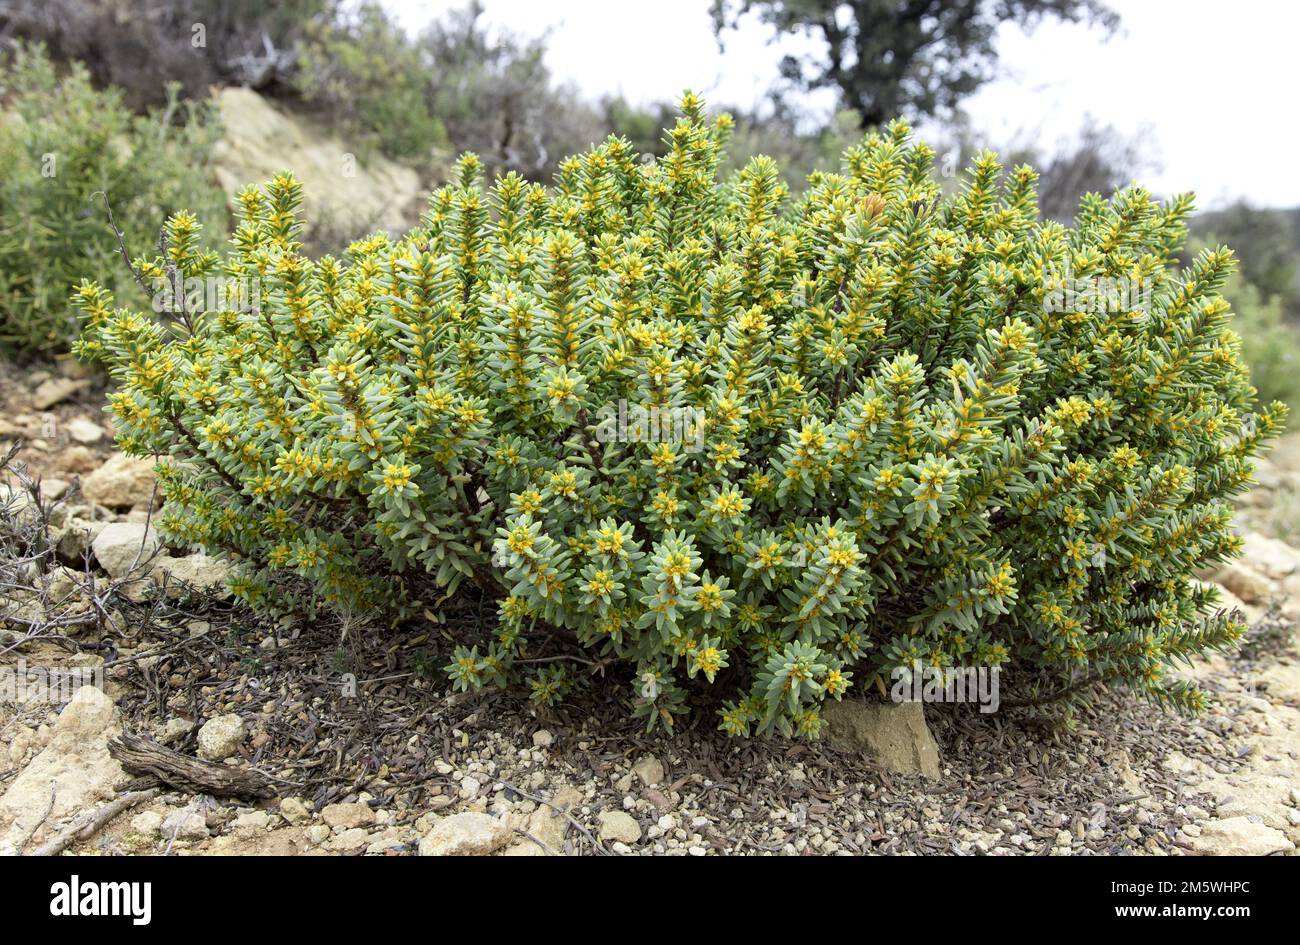 Wild shrub of arid, semi-arid and semi-desert areas in its natural habitat, scientific name Thymelaea tinctoria, bufalaga Stock Photo